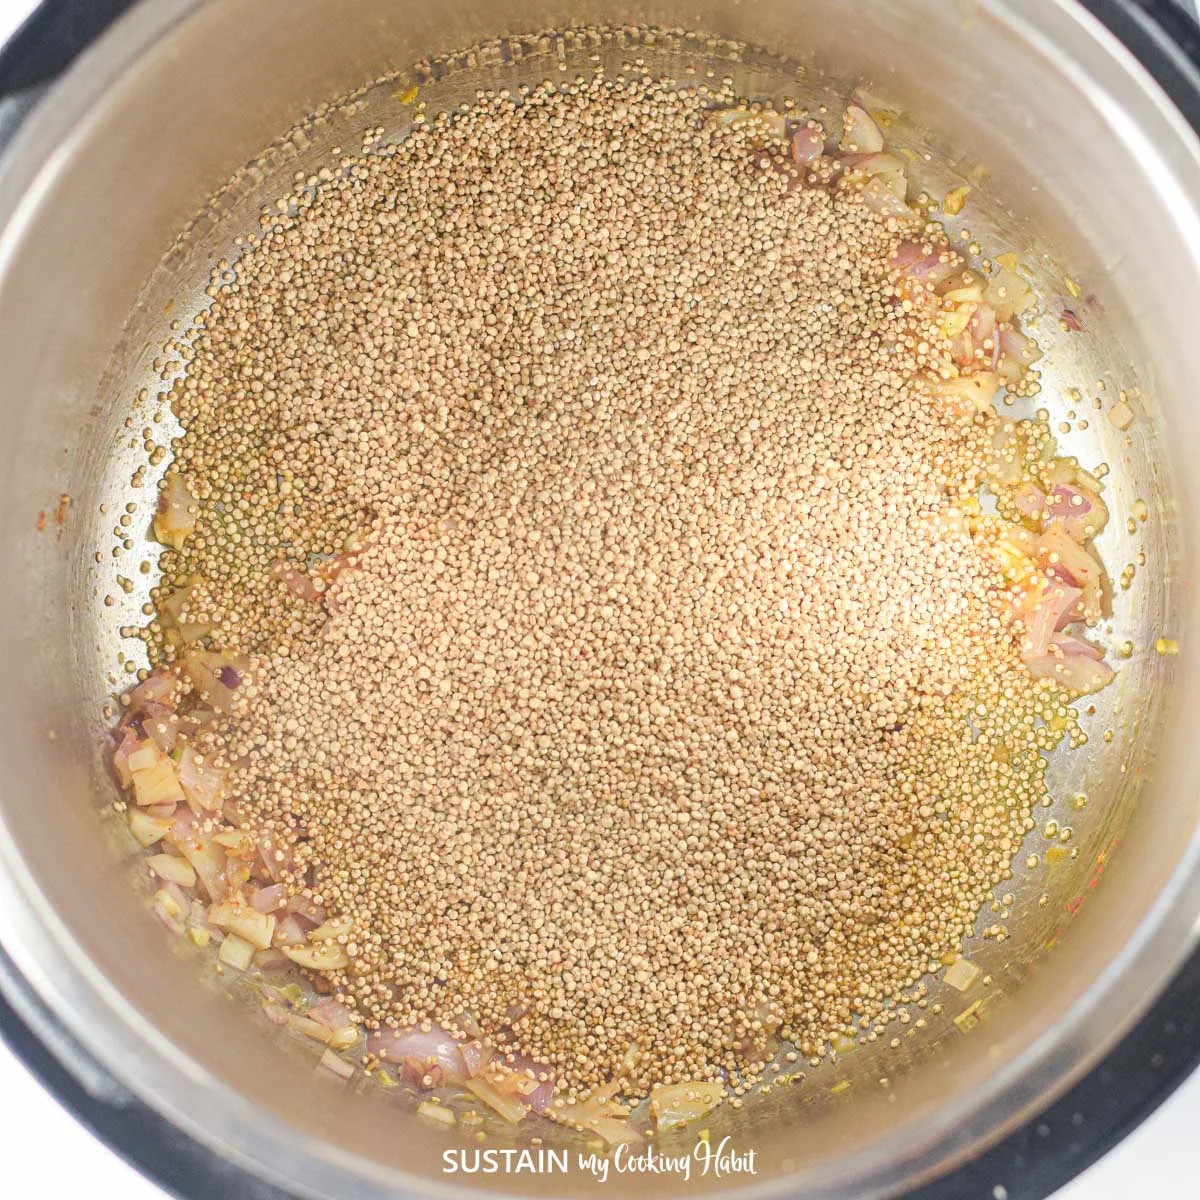 Adding quinoa to the Instant pot. 